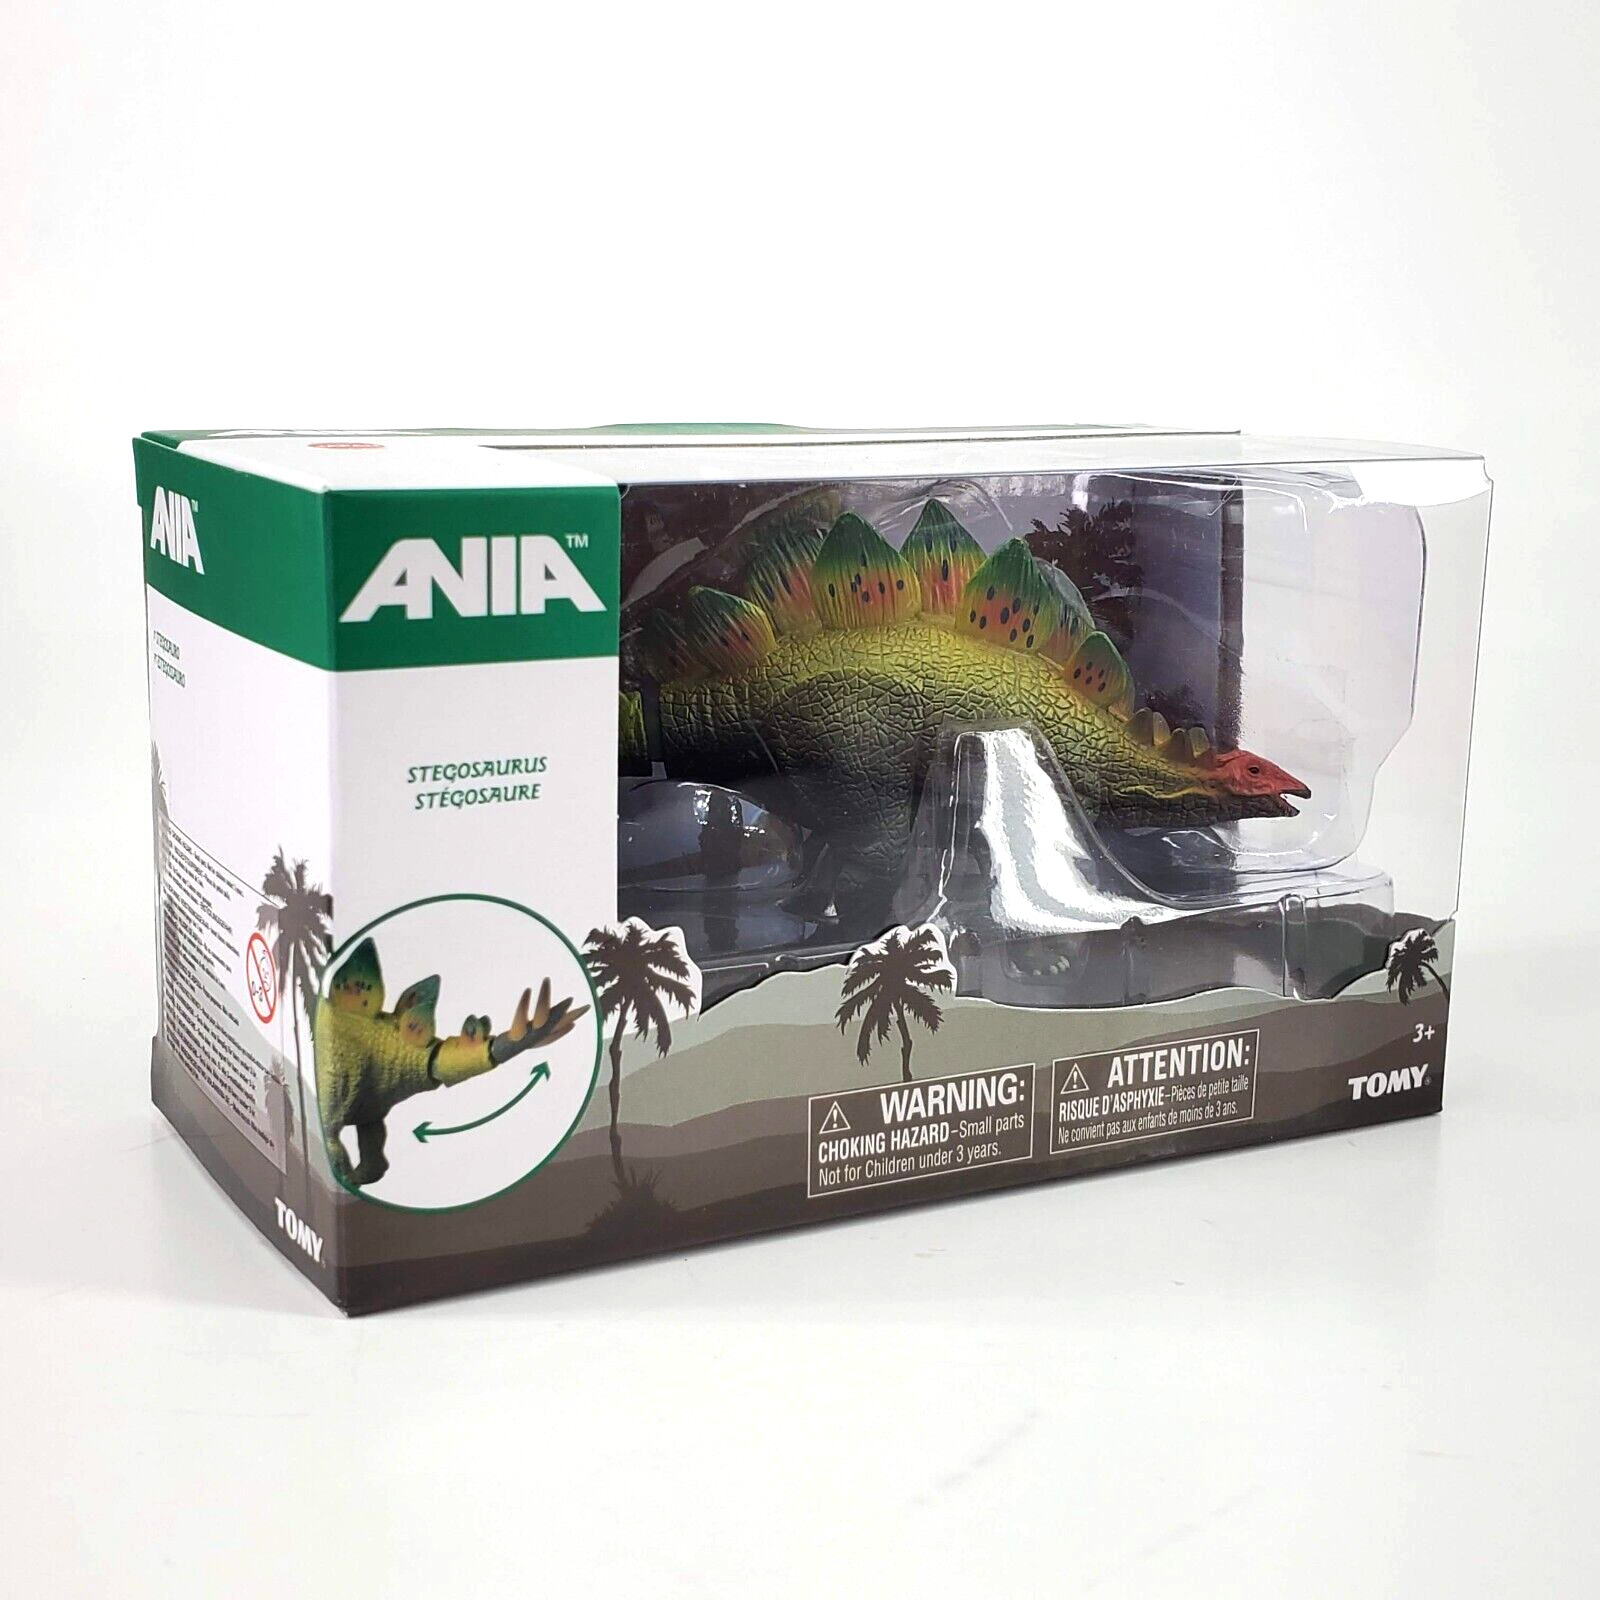 Ania Stegosaurus Articulated Dinosaur Animal Figure TOMY